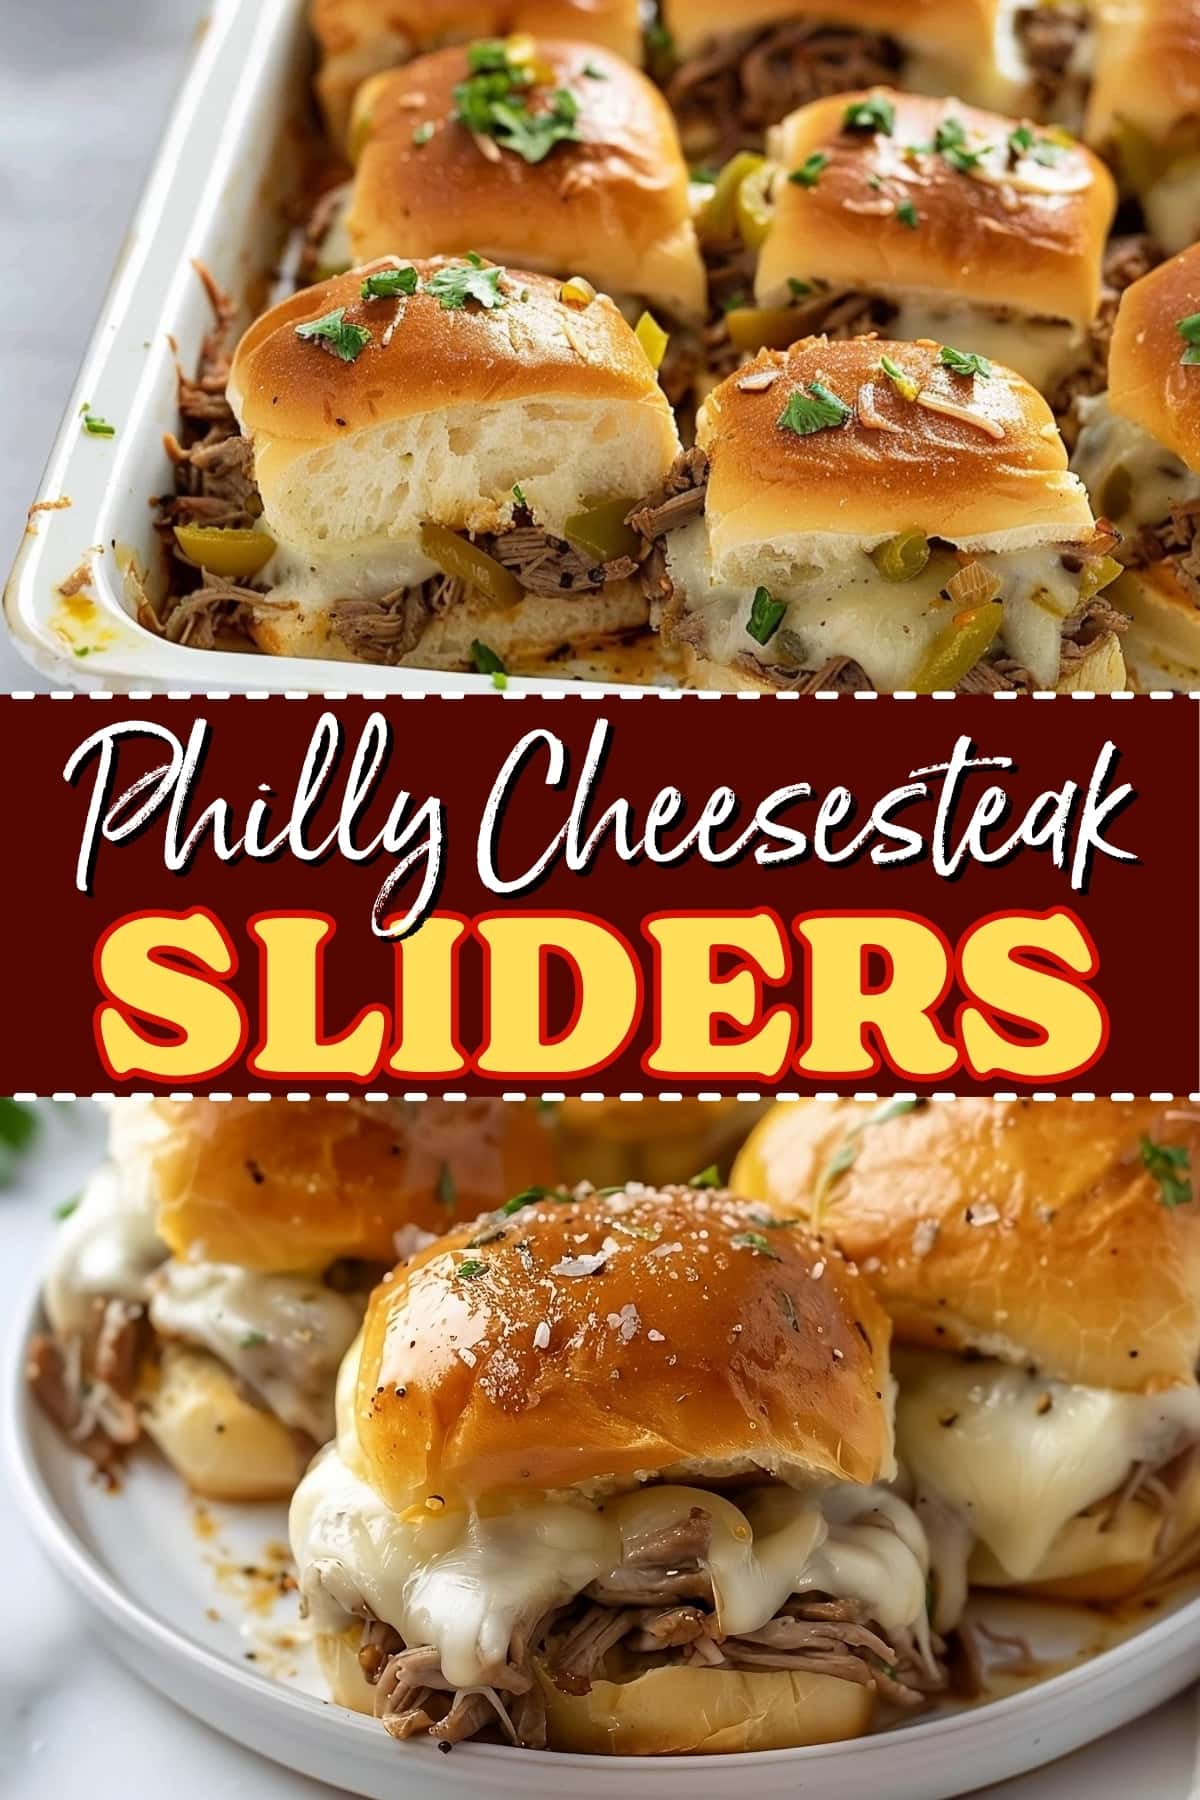 Philly cheesesteak sliders.